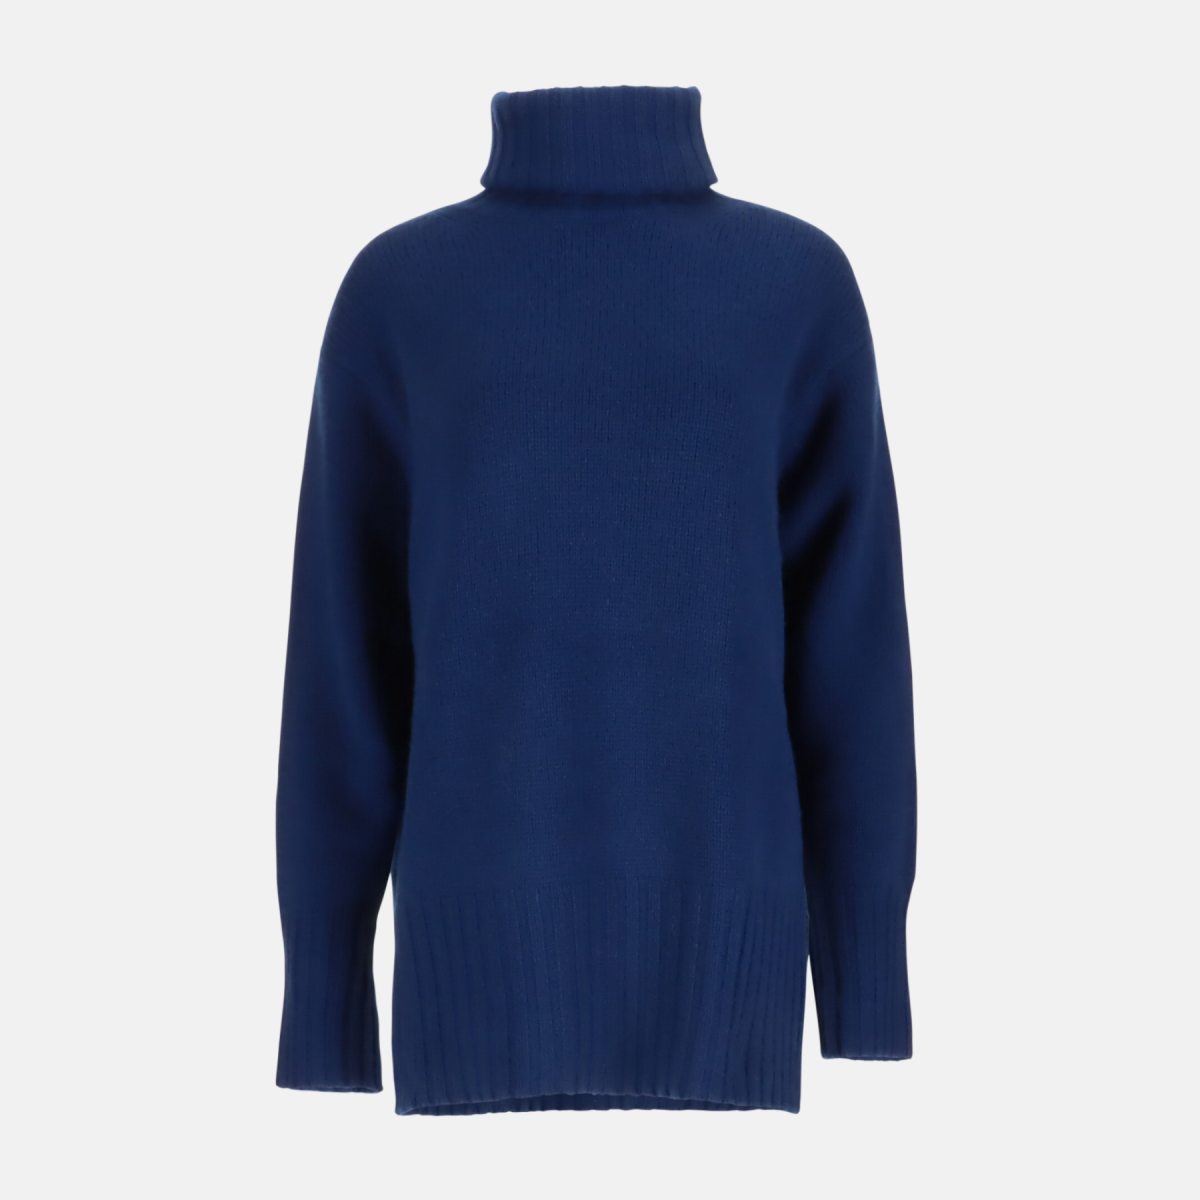 Allude Turtleneck Sweater